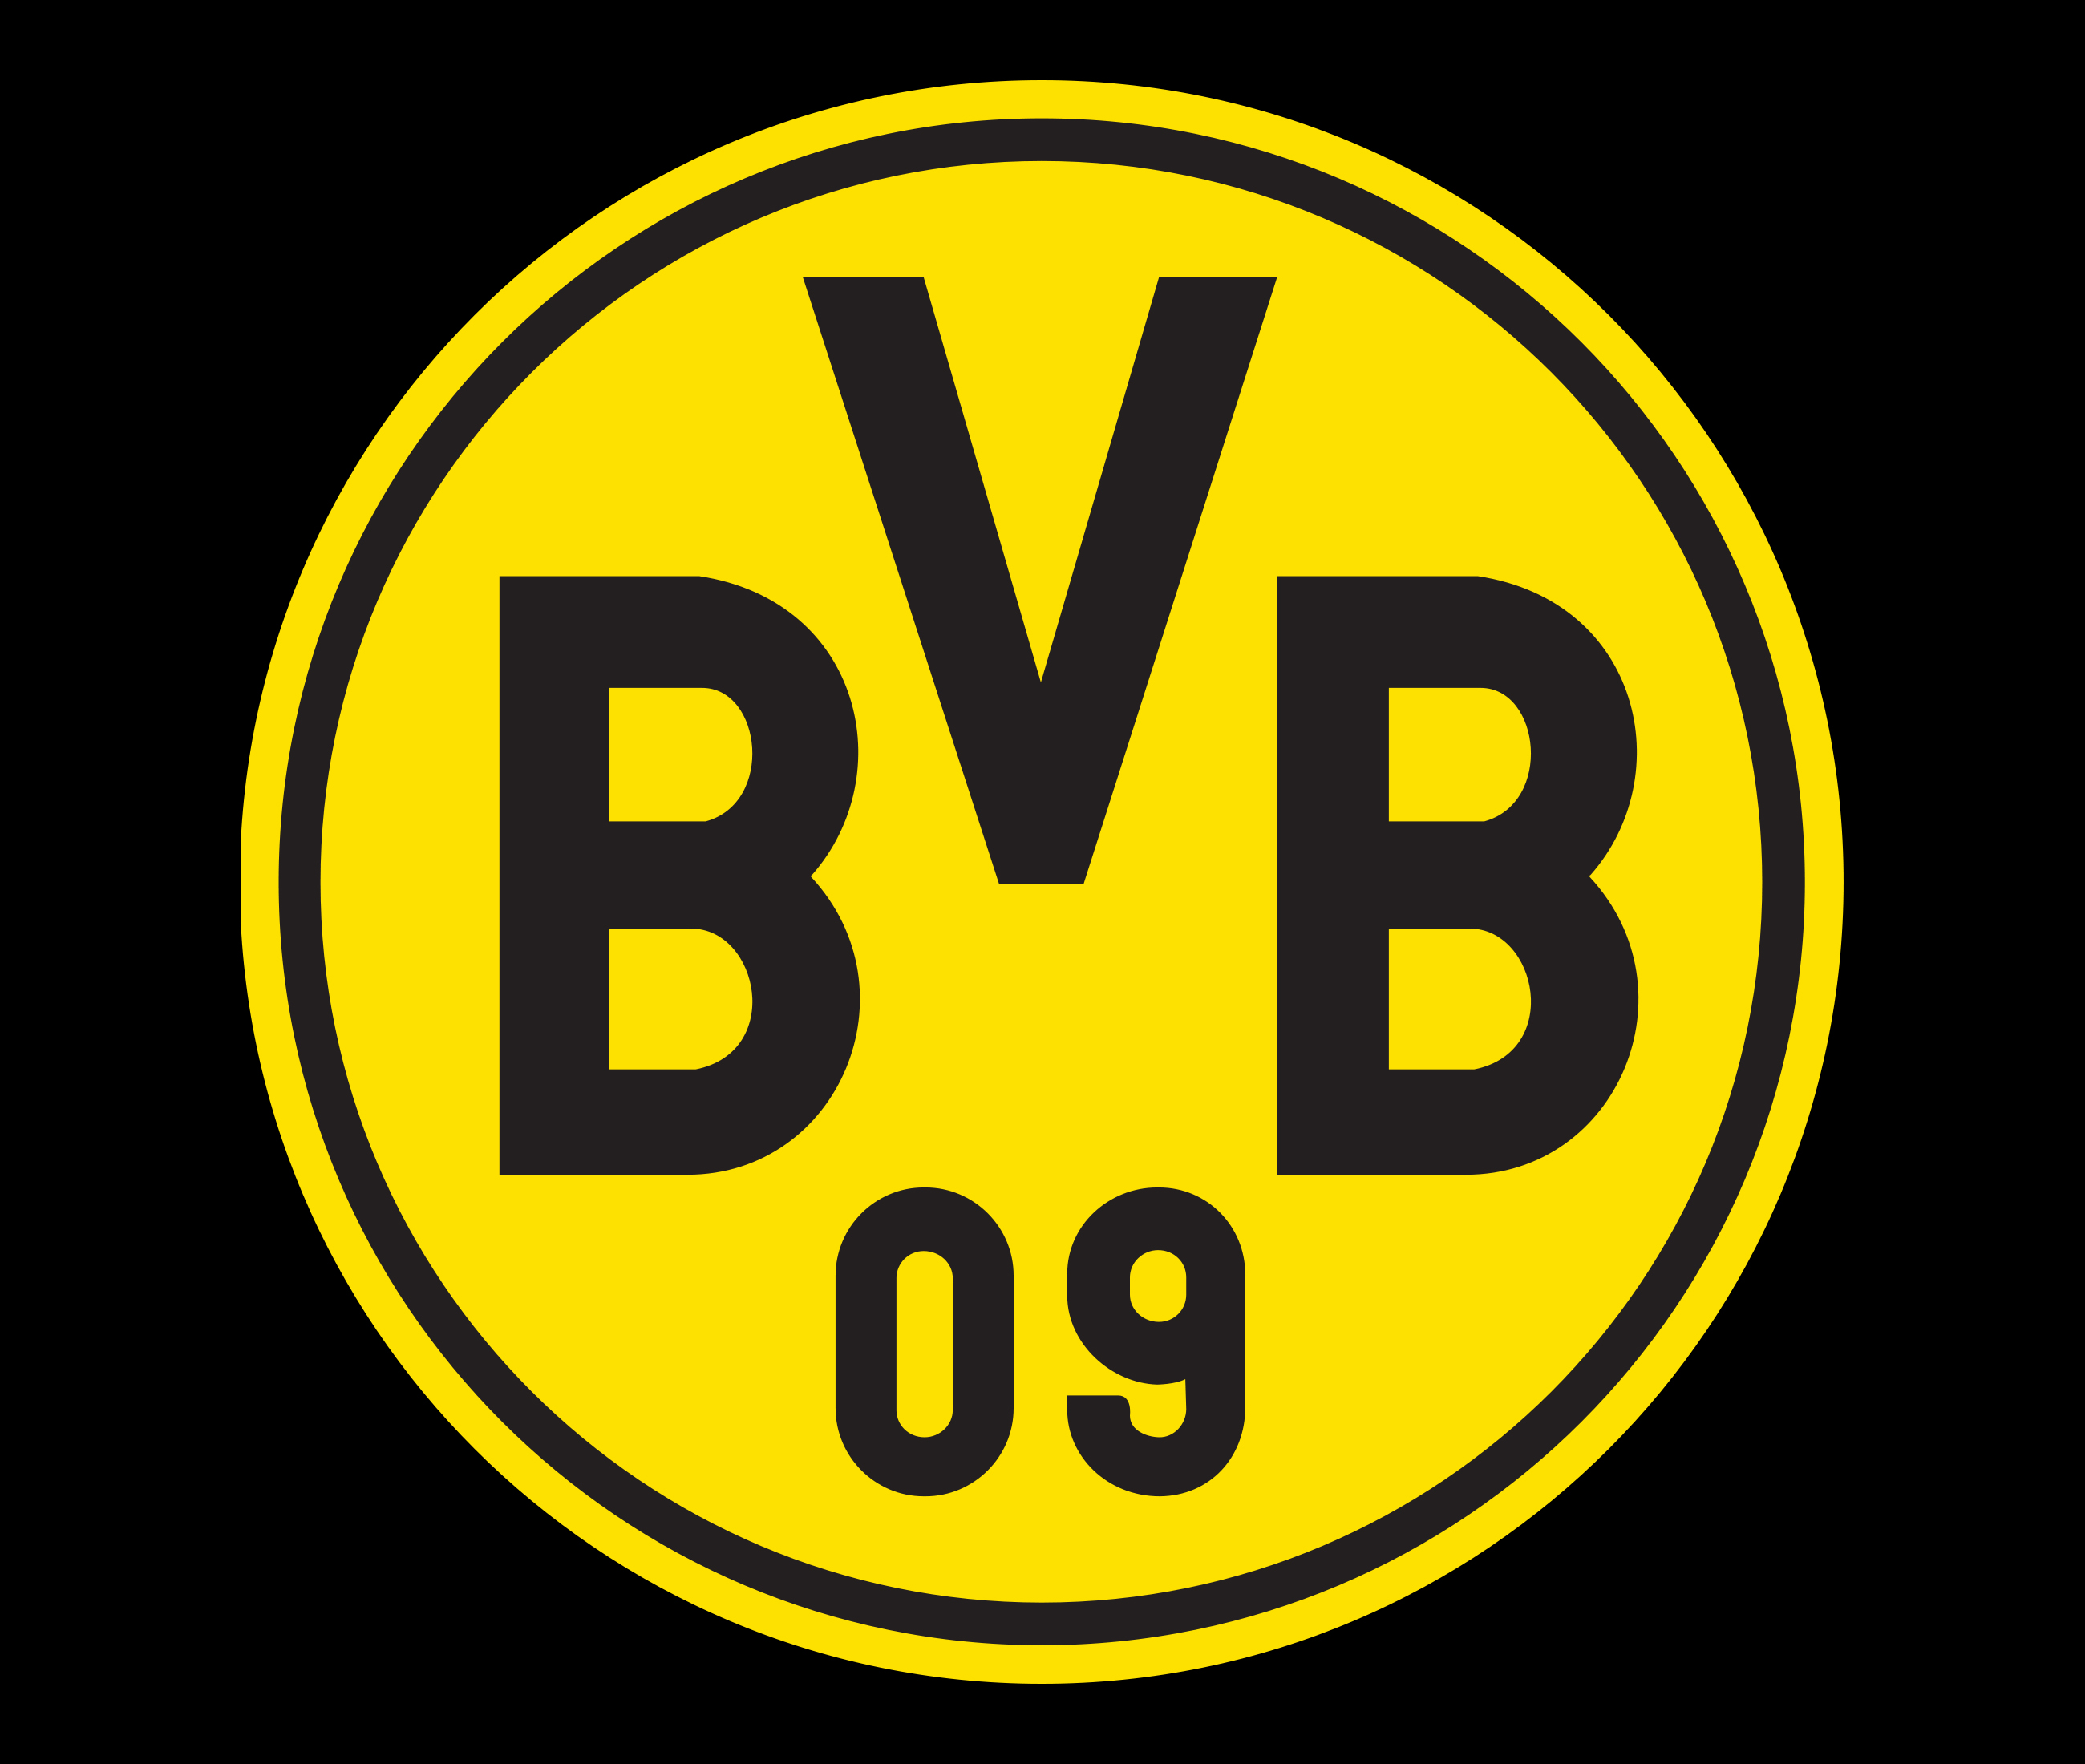 Bvb Symbol